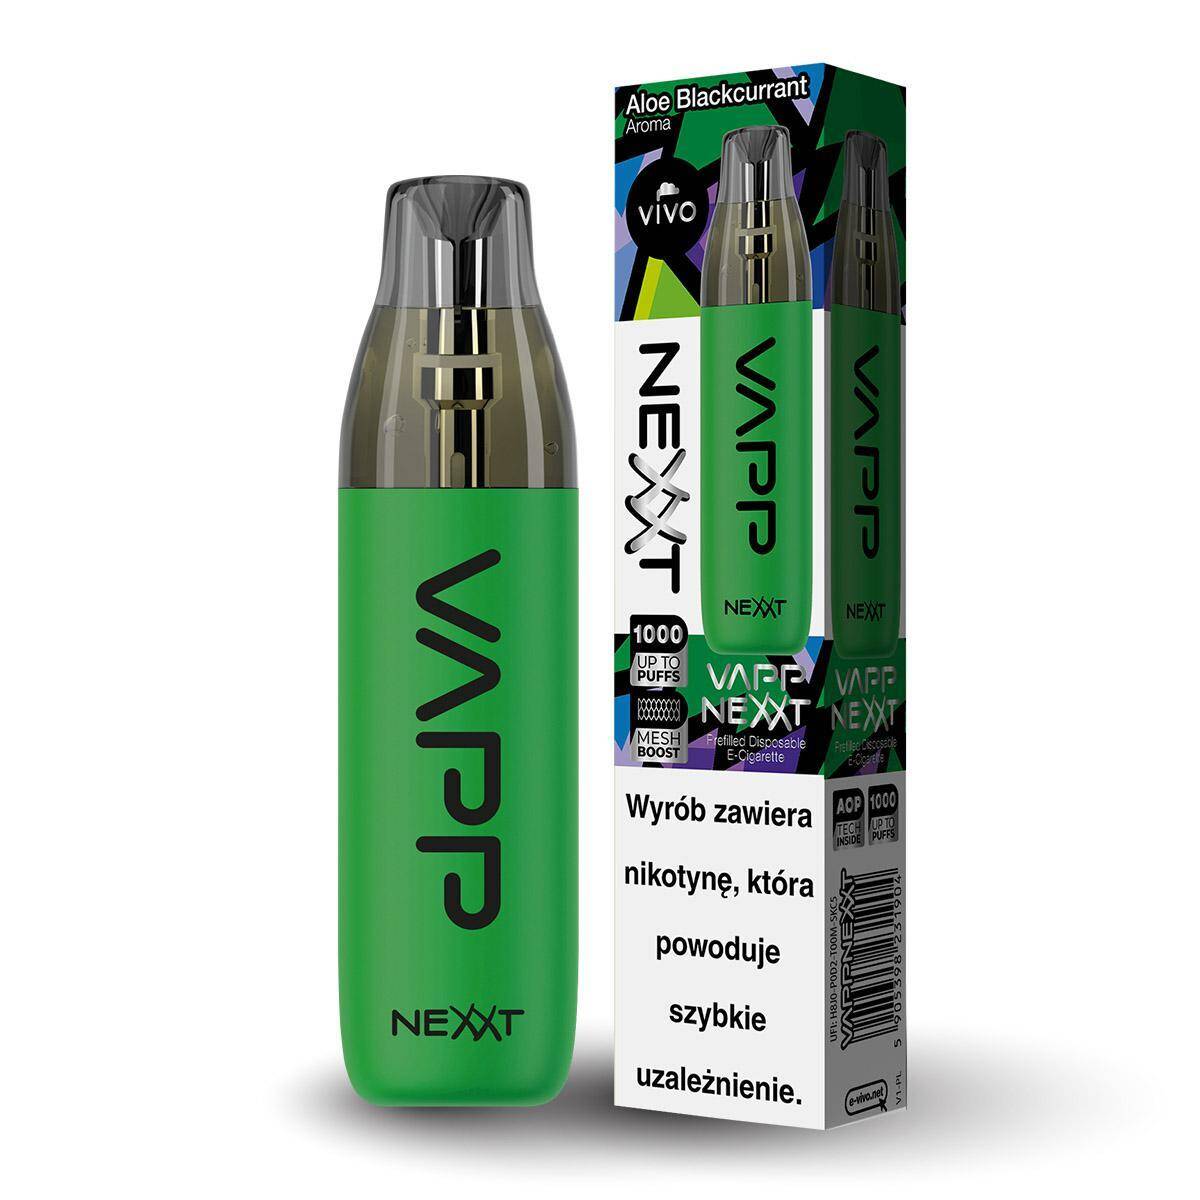 Disposable e-cigarette VIVO Nexxt - Aloe Blackcurrant 20mg